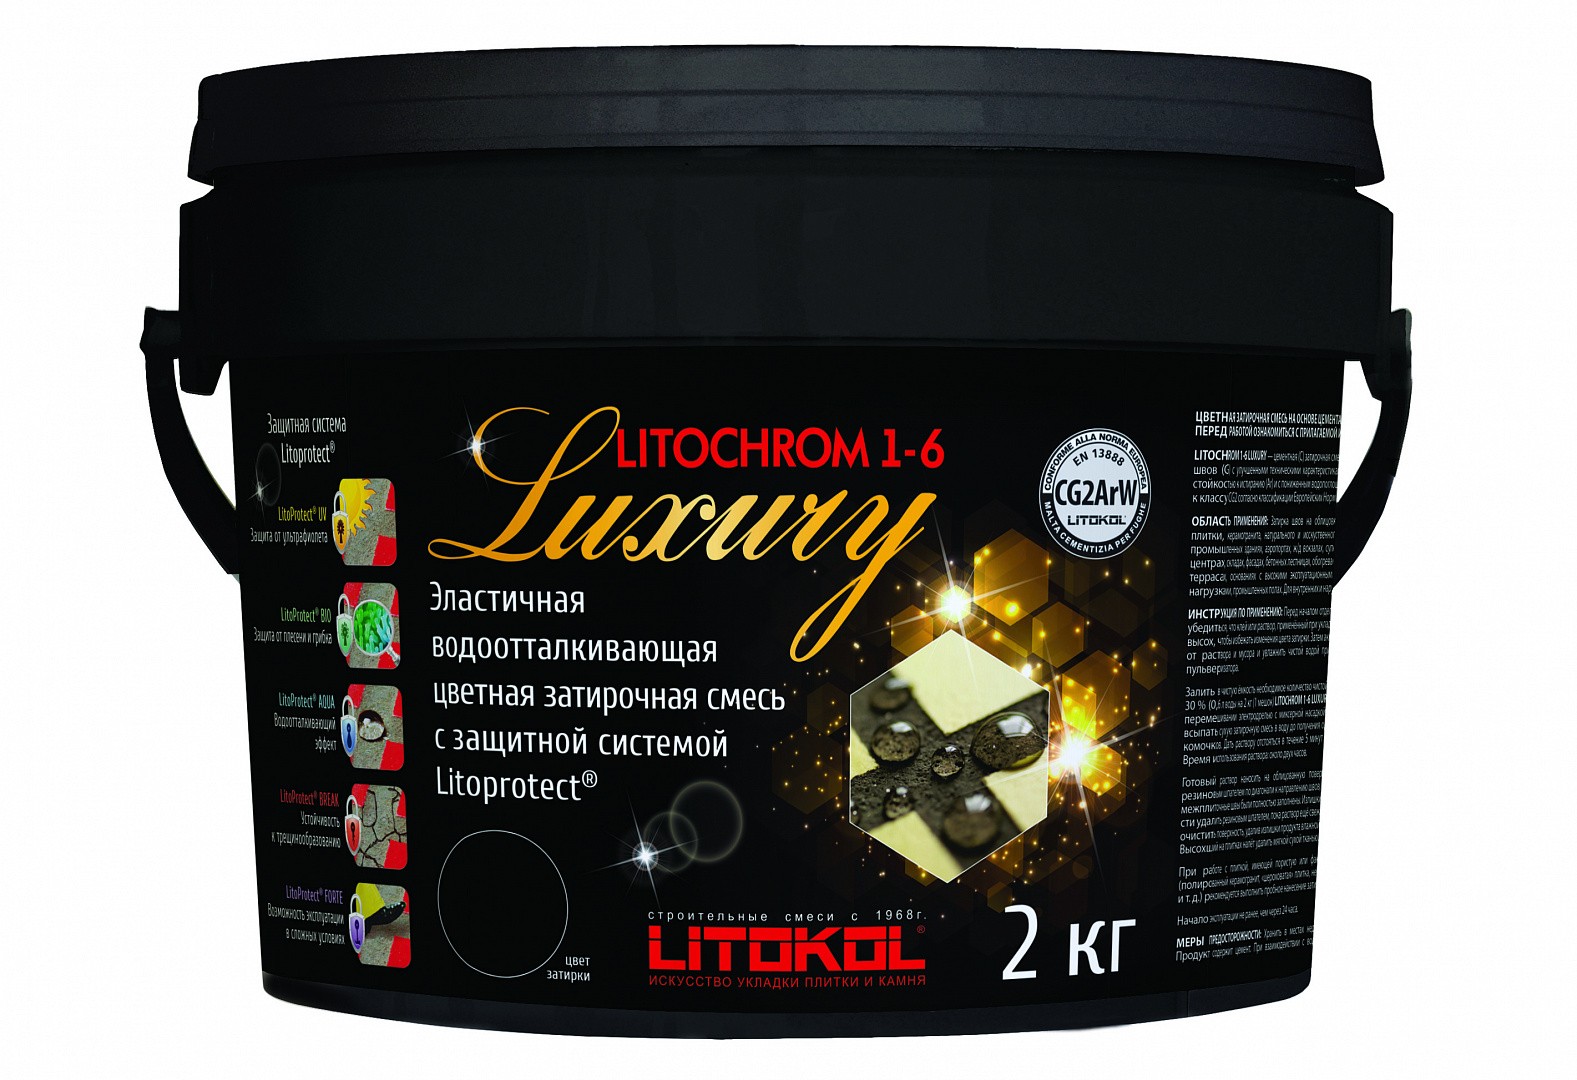 Цементная затирочная смесь LITOCHROM 1-6 LUXURY C.60